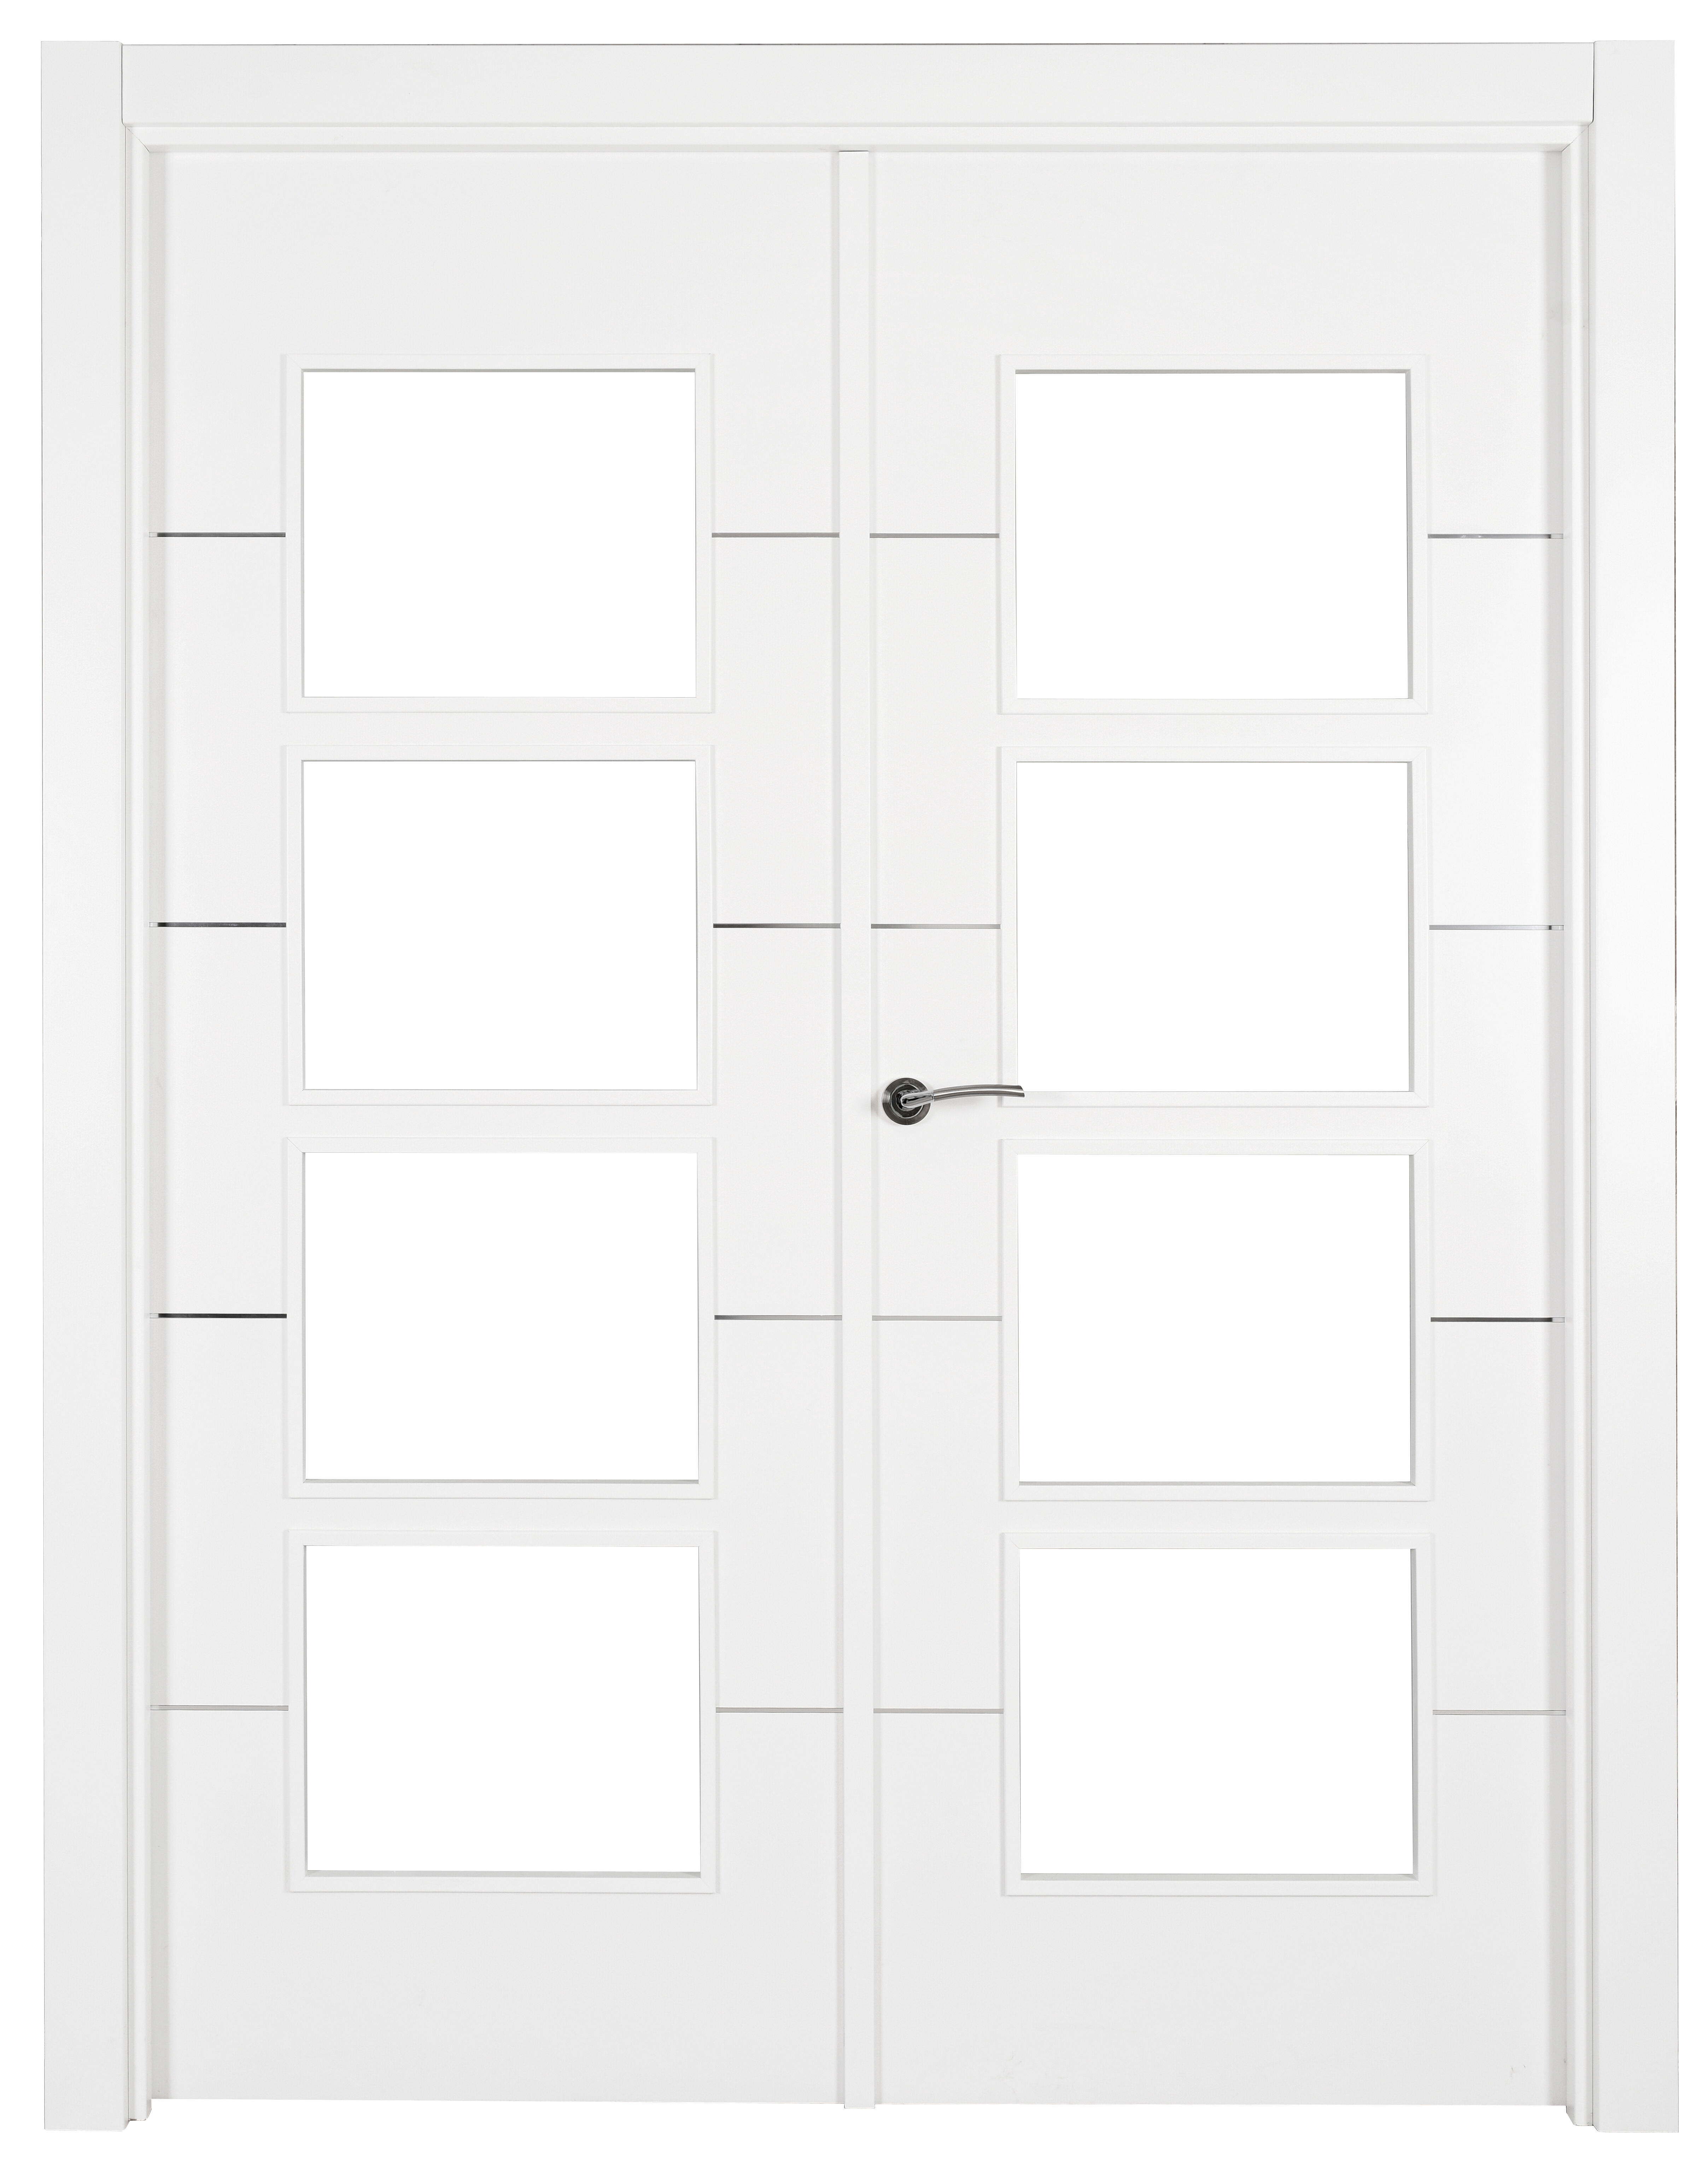 Puerta abatible paris blanca premium apertura derecha de 9x125 cm